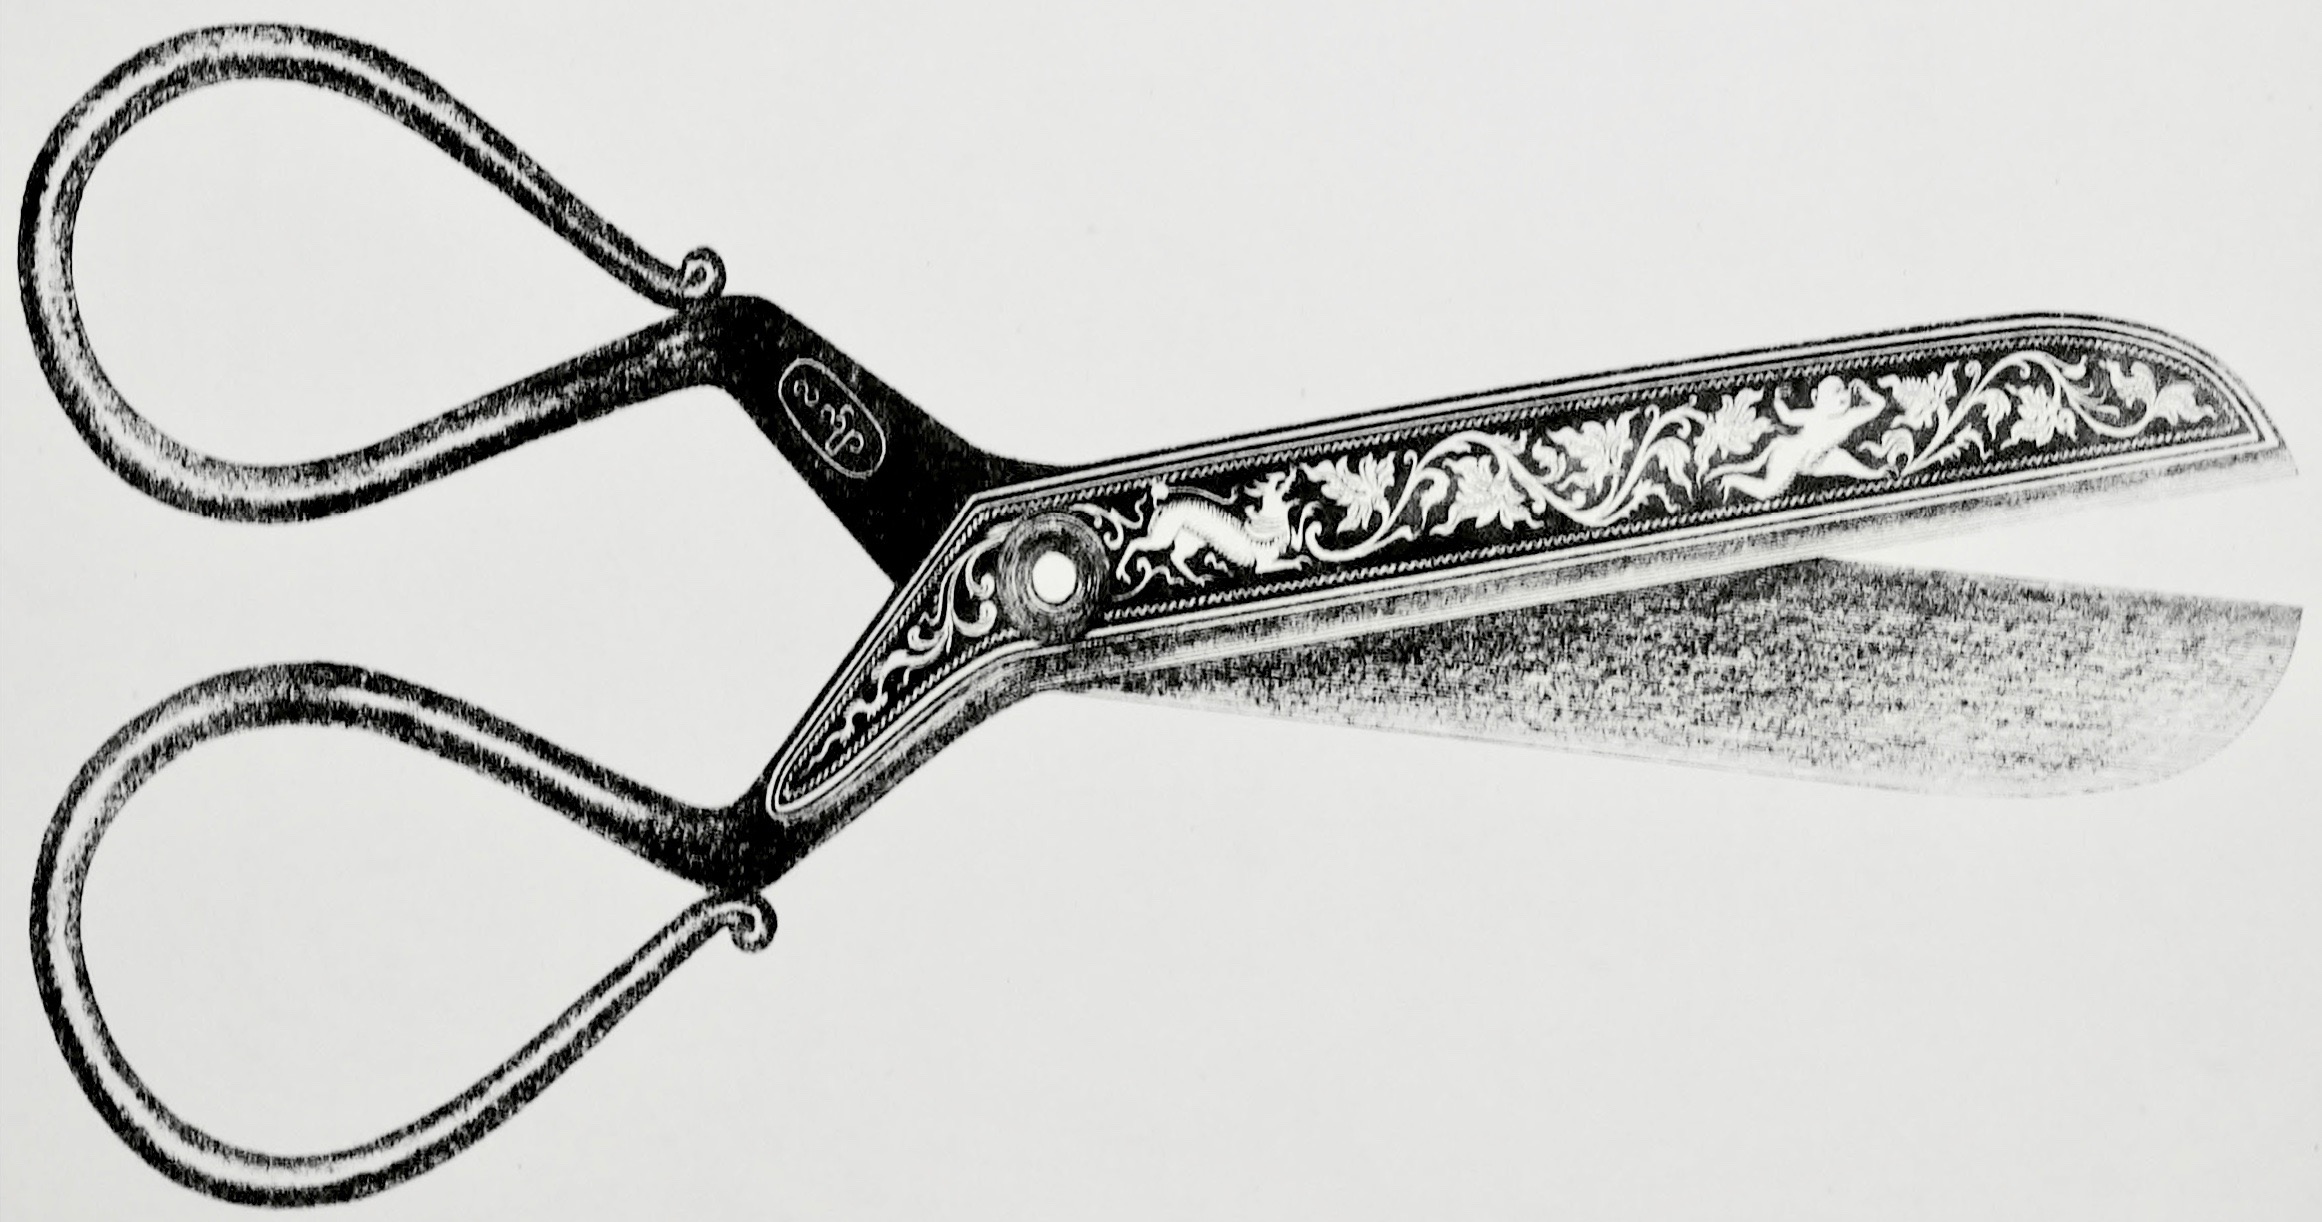 A pair of scissors by Saya Pyo